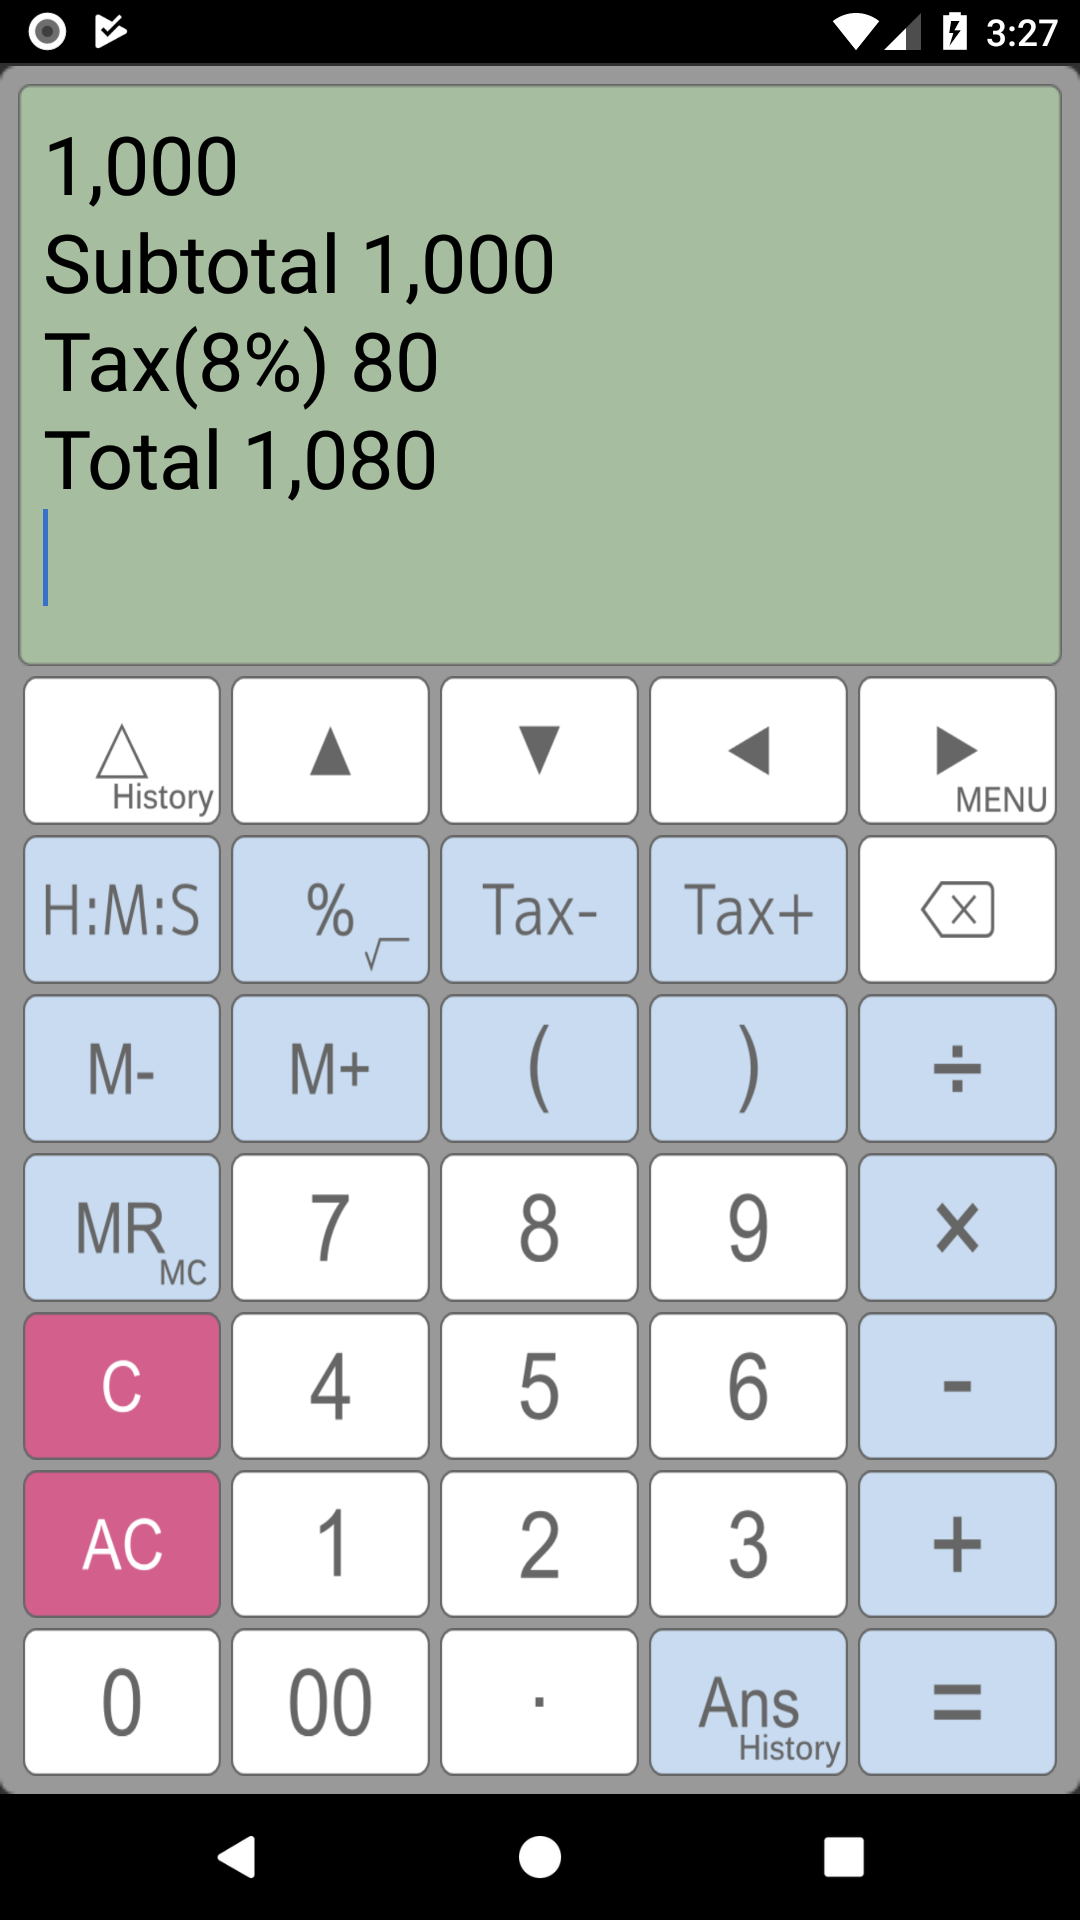 Android application Calculator PanecalST Plus screenshort